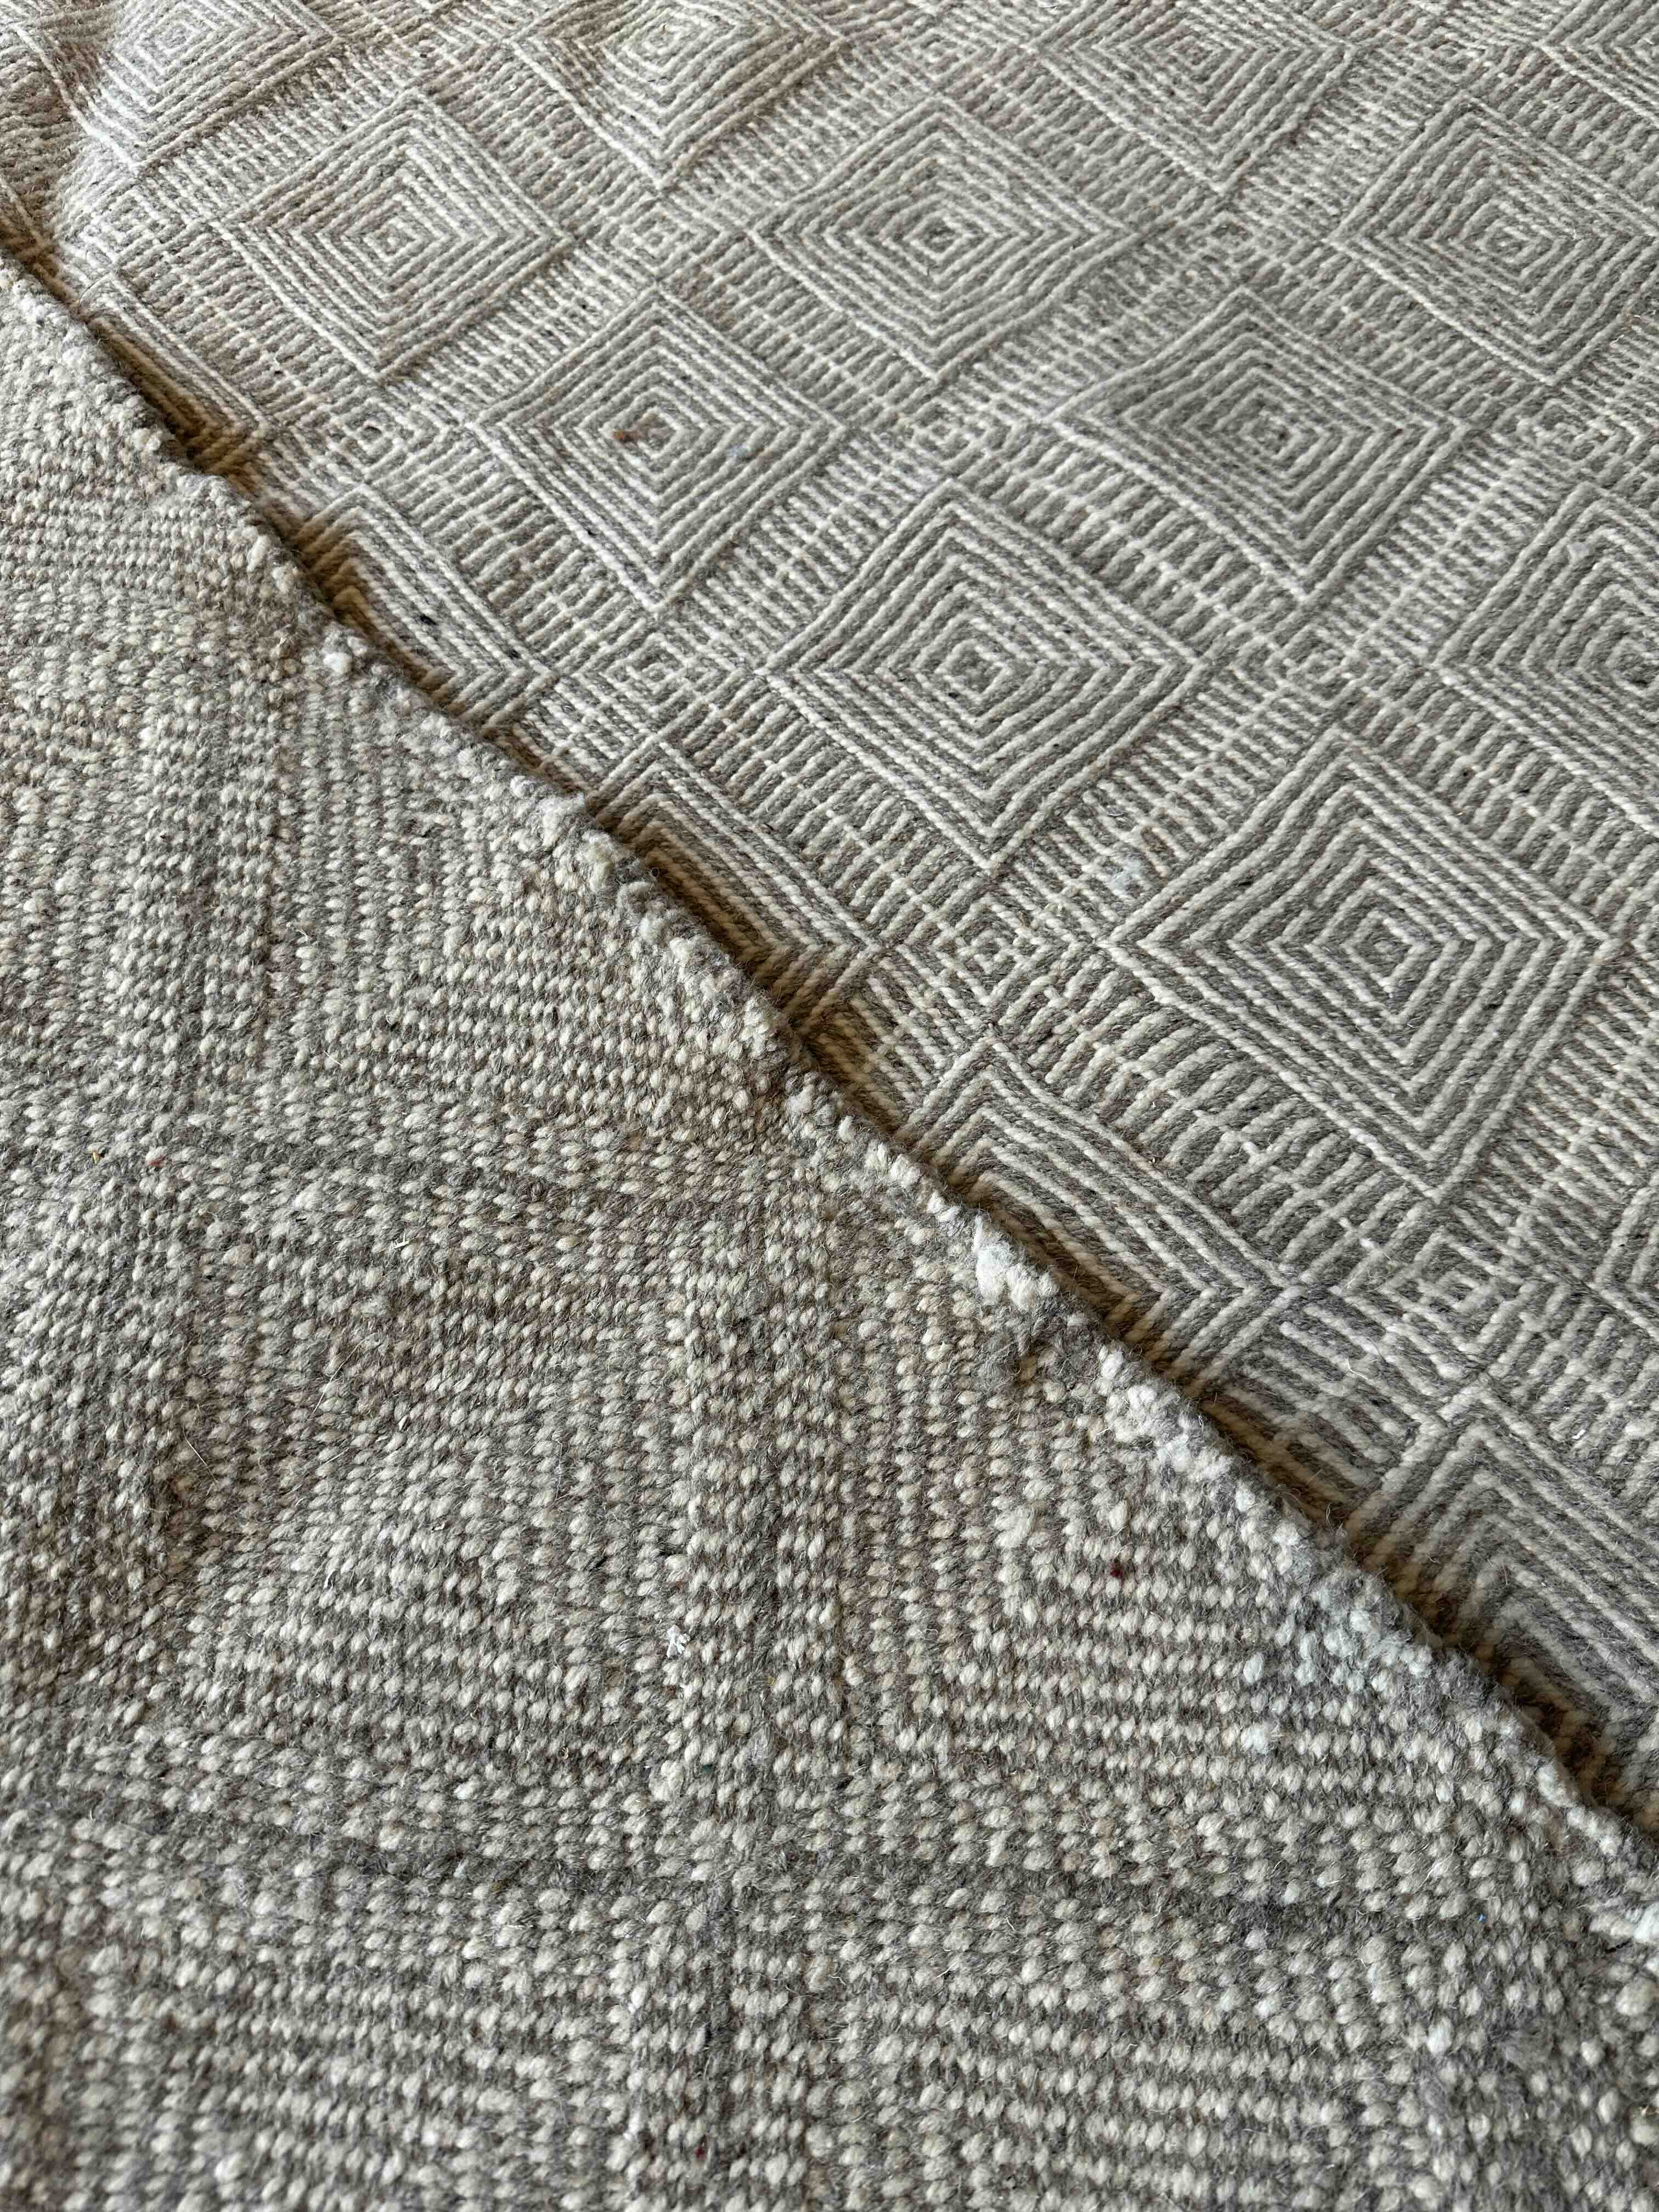 Marrokansk uld gulvtæppe i Mokka og hvid farver.